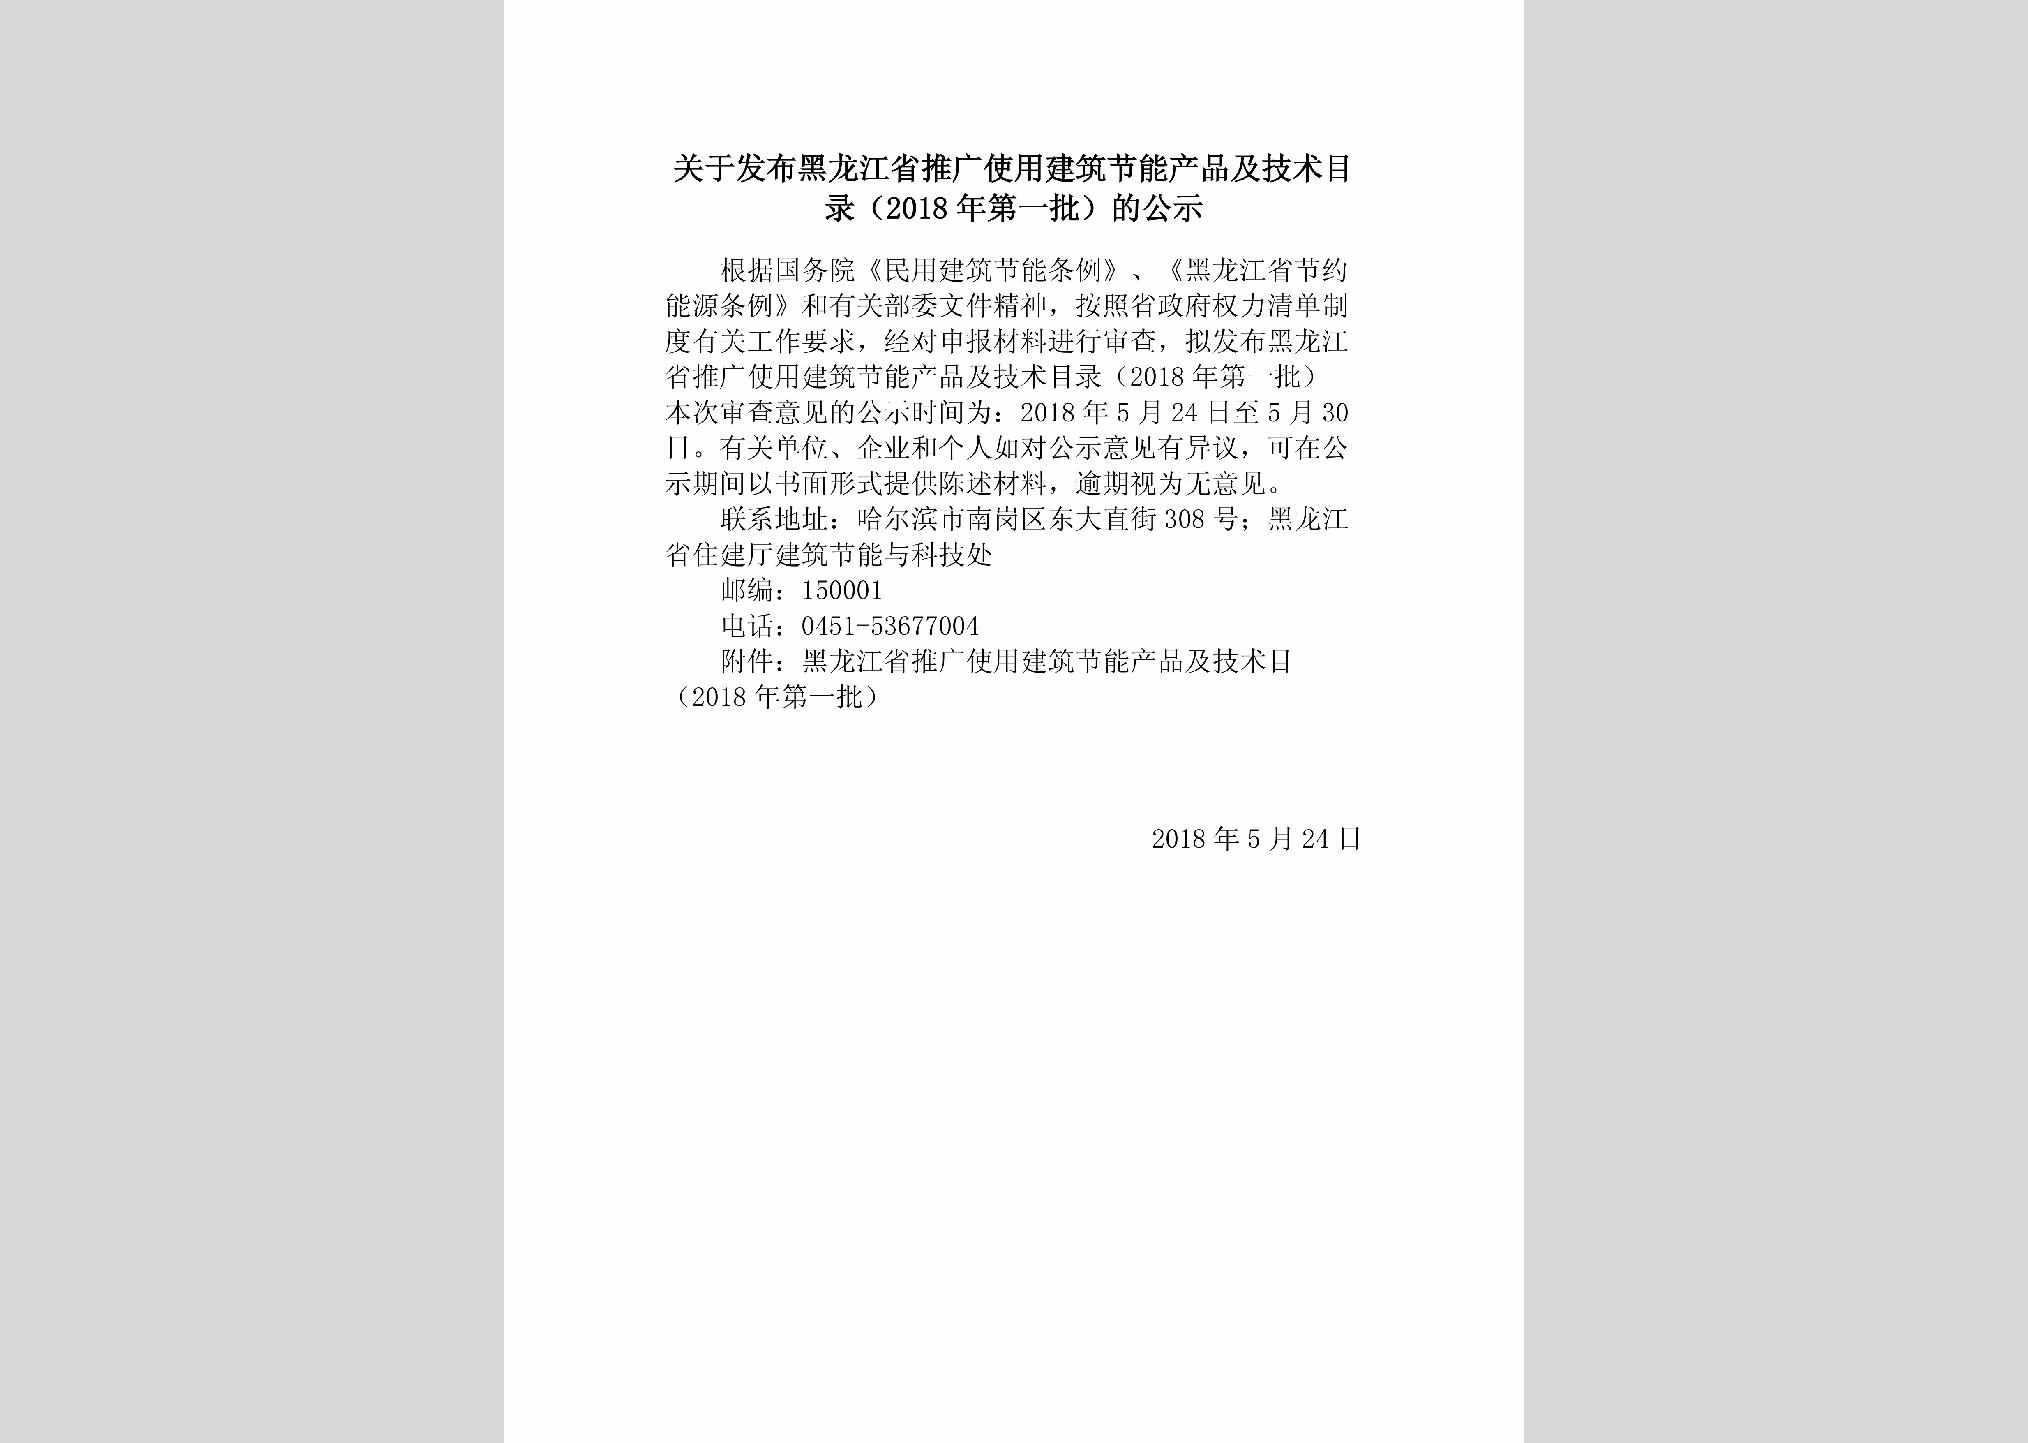 HLJ-SYJZJNCP-2018：关于发布黑龙江省推广使用建筑节能产品及技术目录（2018年第一批）的公示